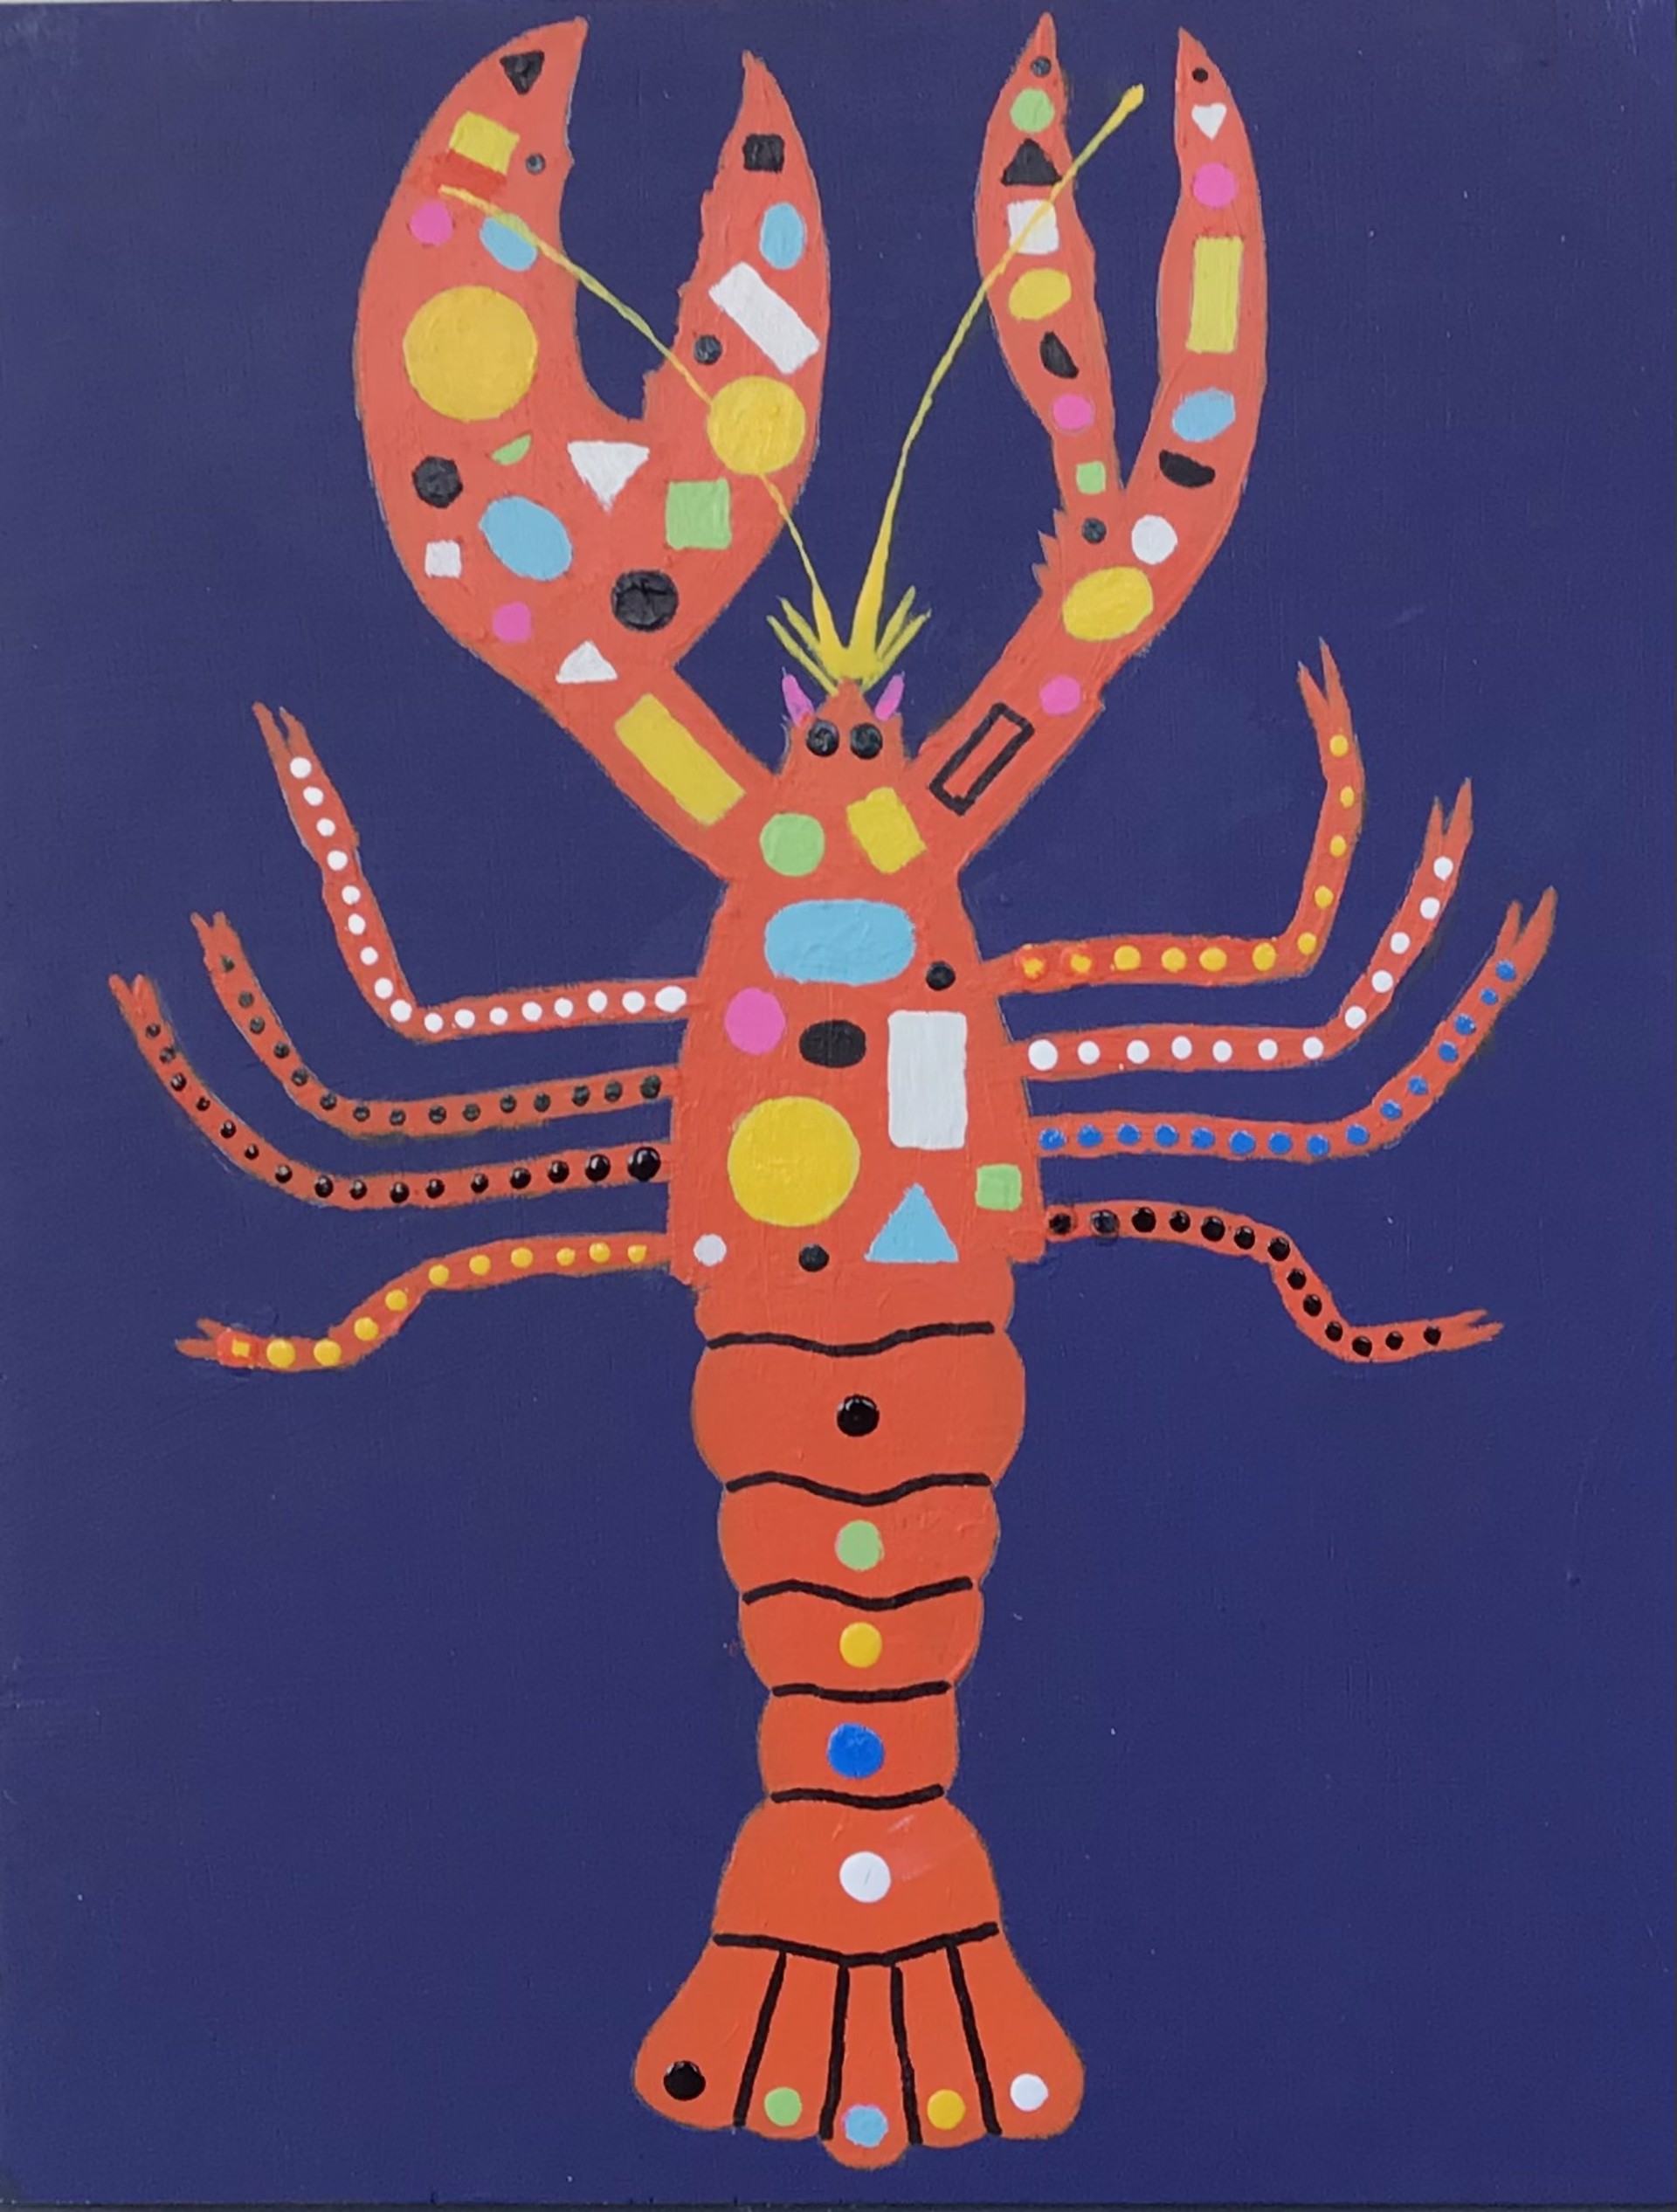 Polkadot Lobster by Jodi Edwards